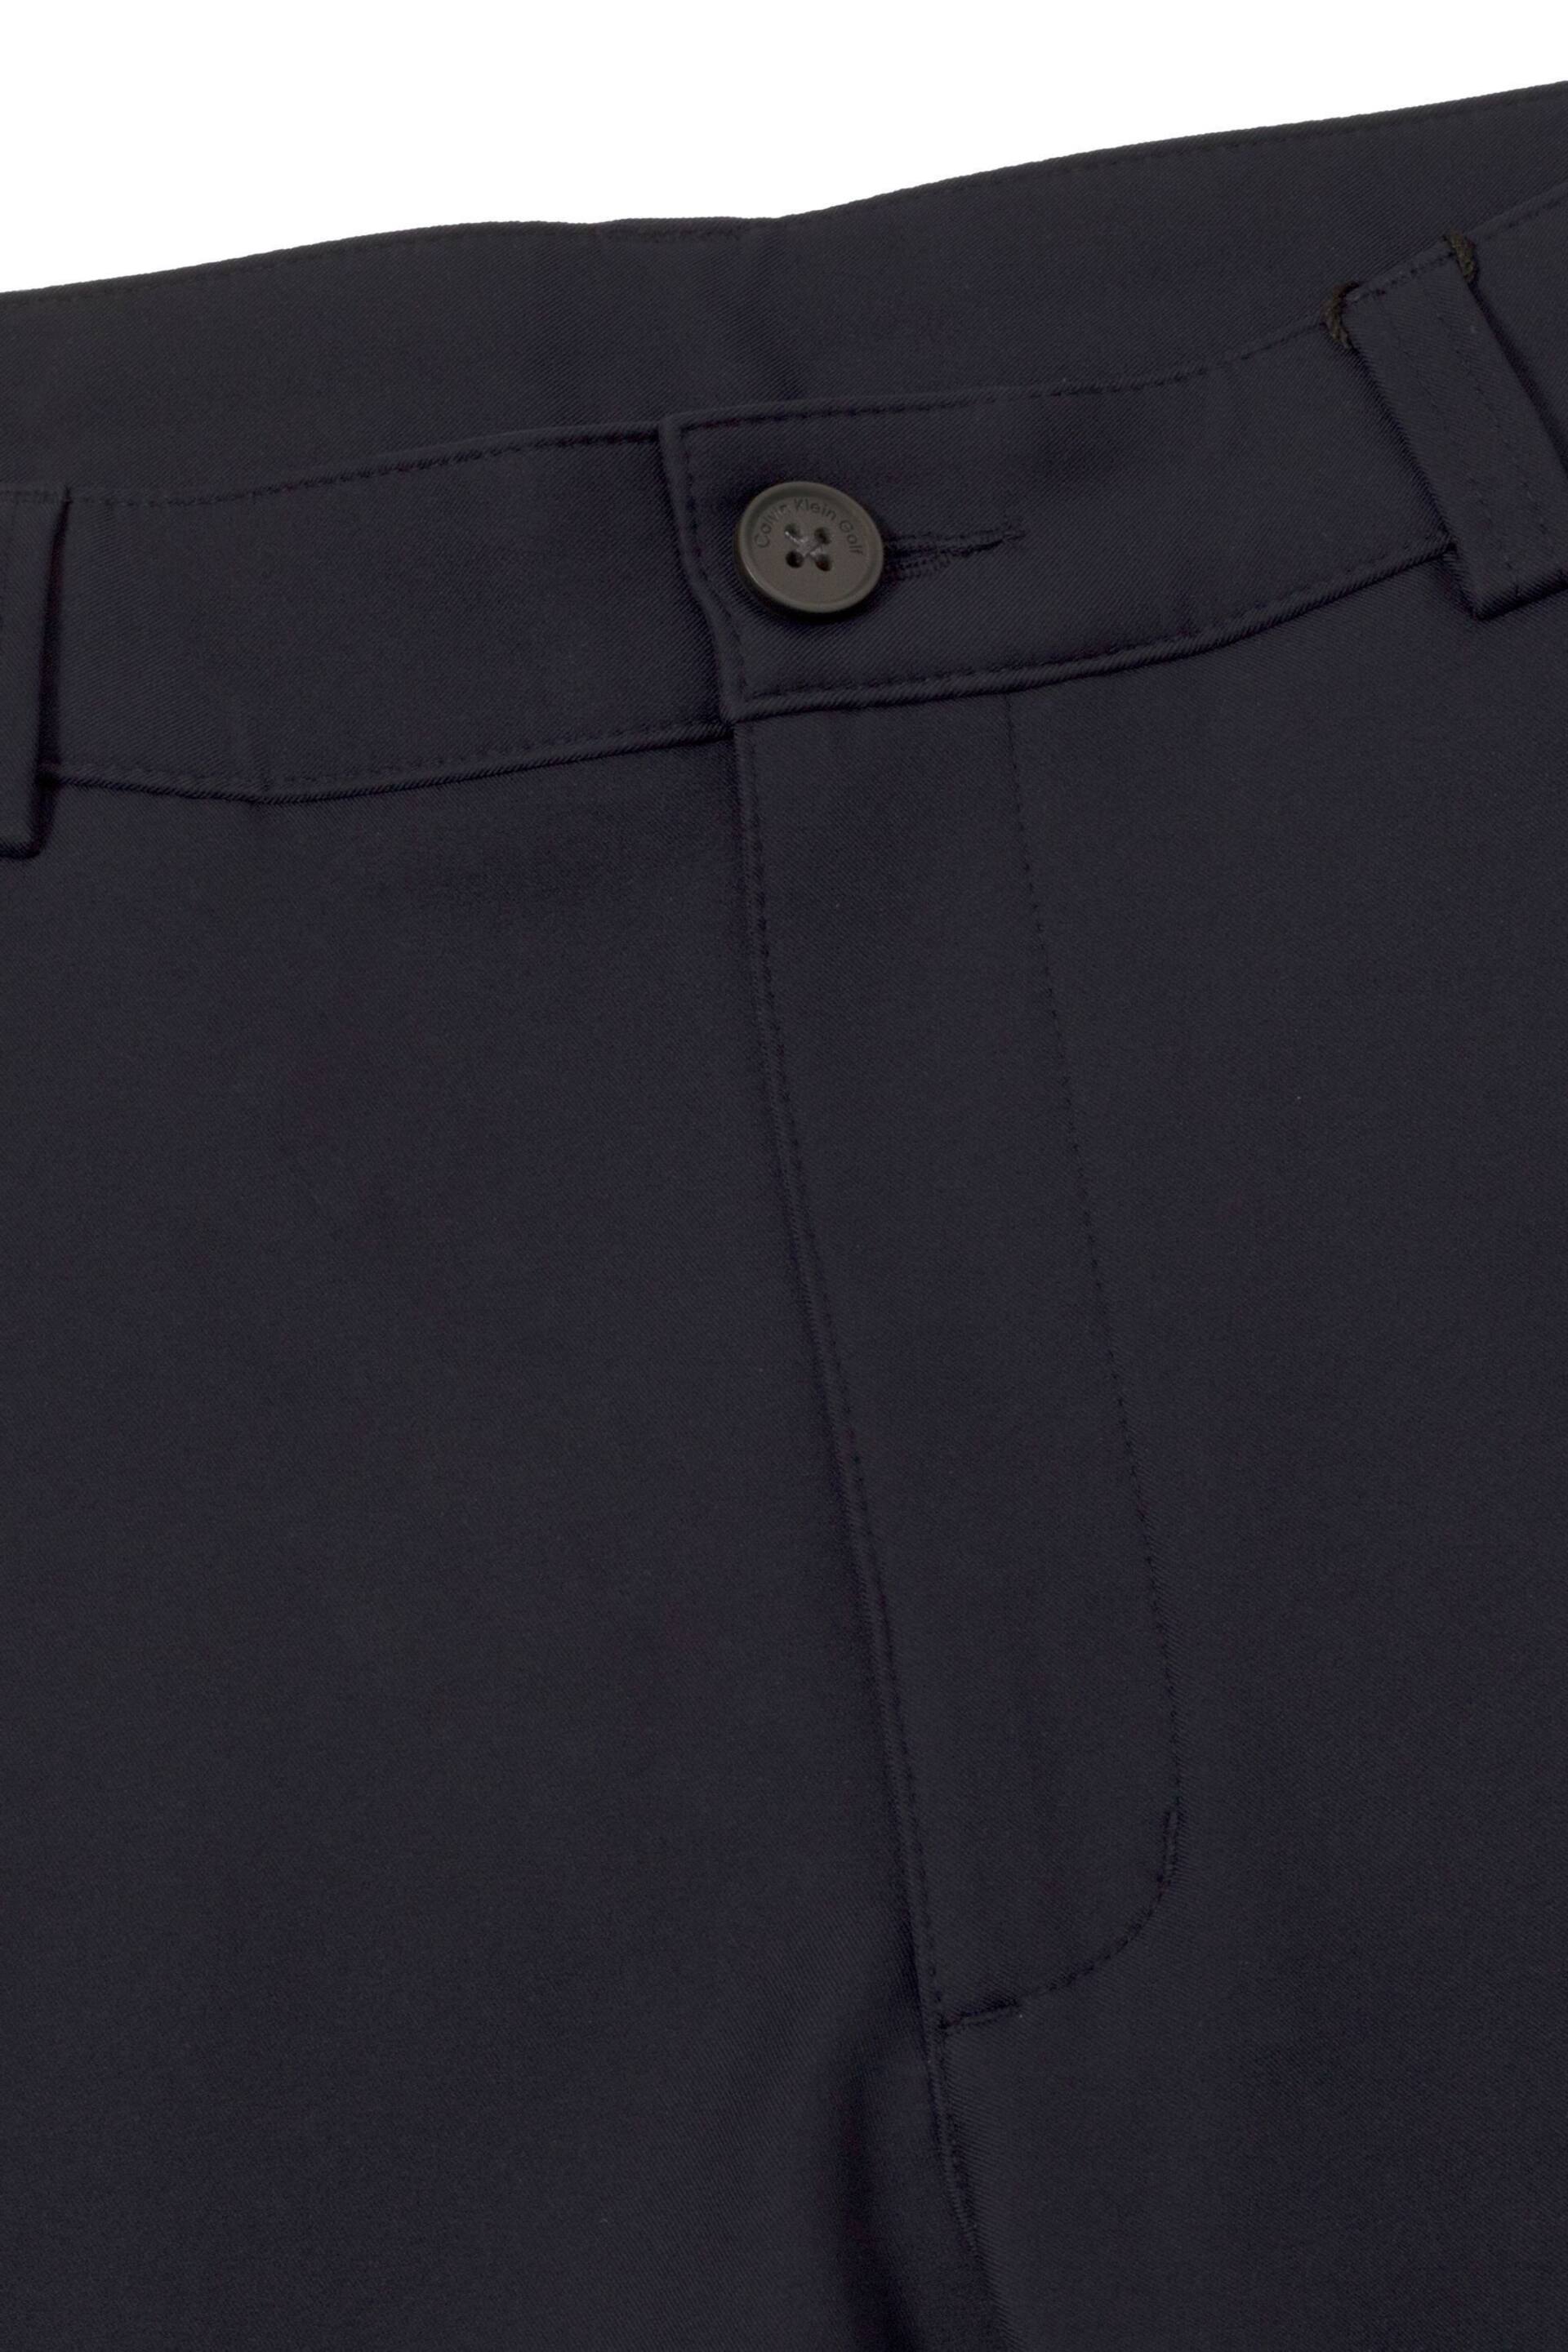 Calvin Klein Golf Black Regular Fit Tech Warm Trousers - Image 7 of 8